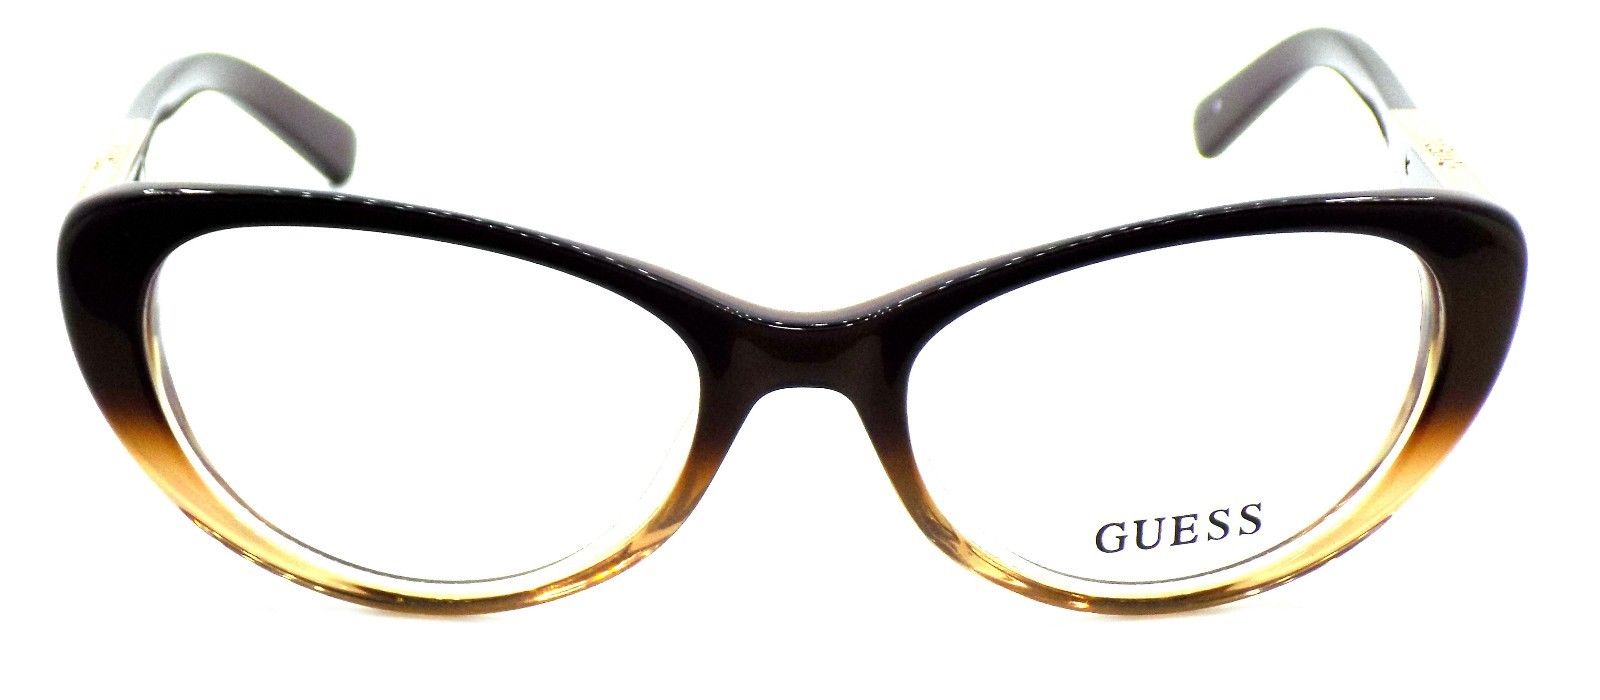 2-GUESS GU2384 BRN Women's Plastic Eyeglasses Frames 51-17-135 Brown + CASE-715583765955-IKSpecs